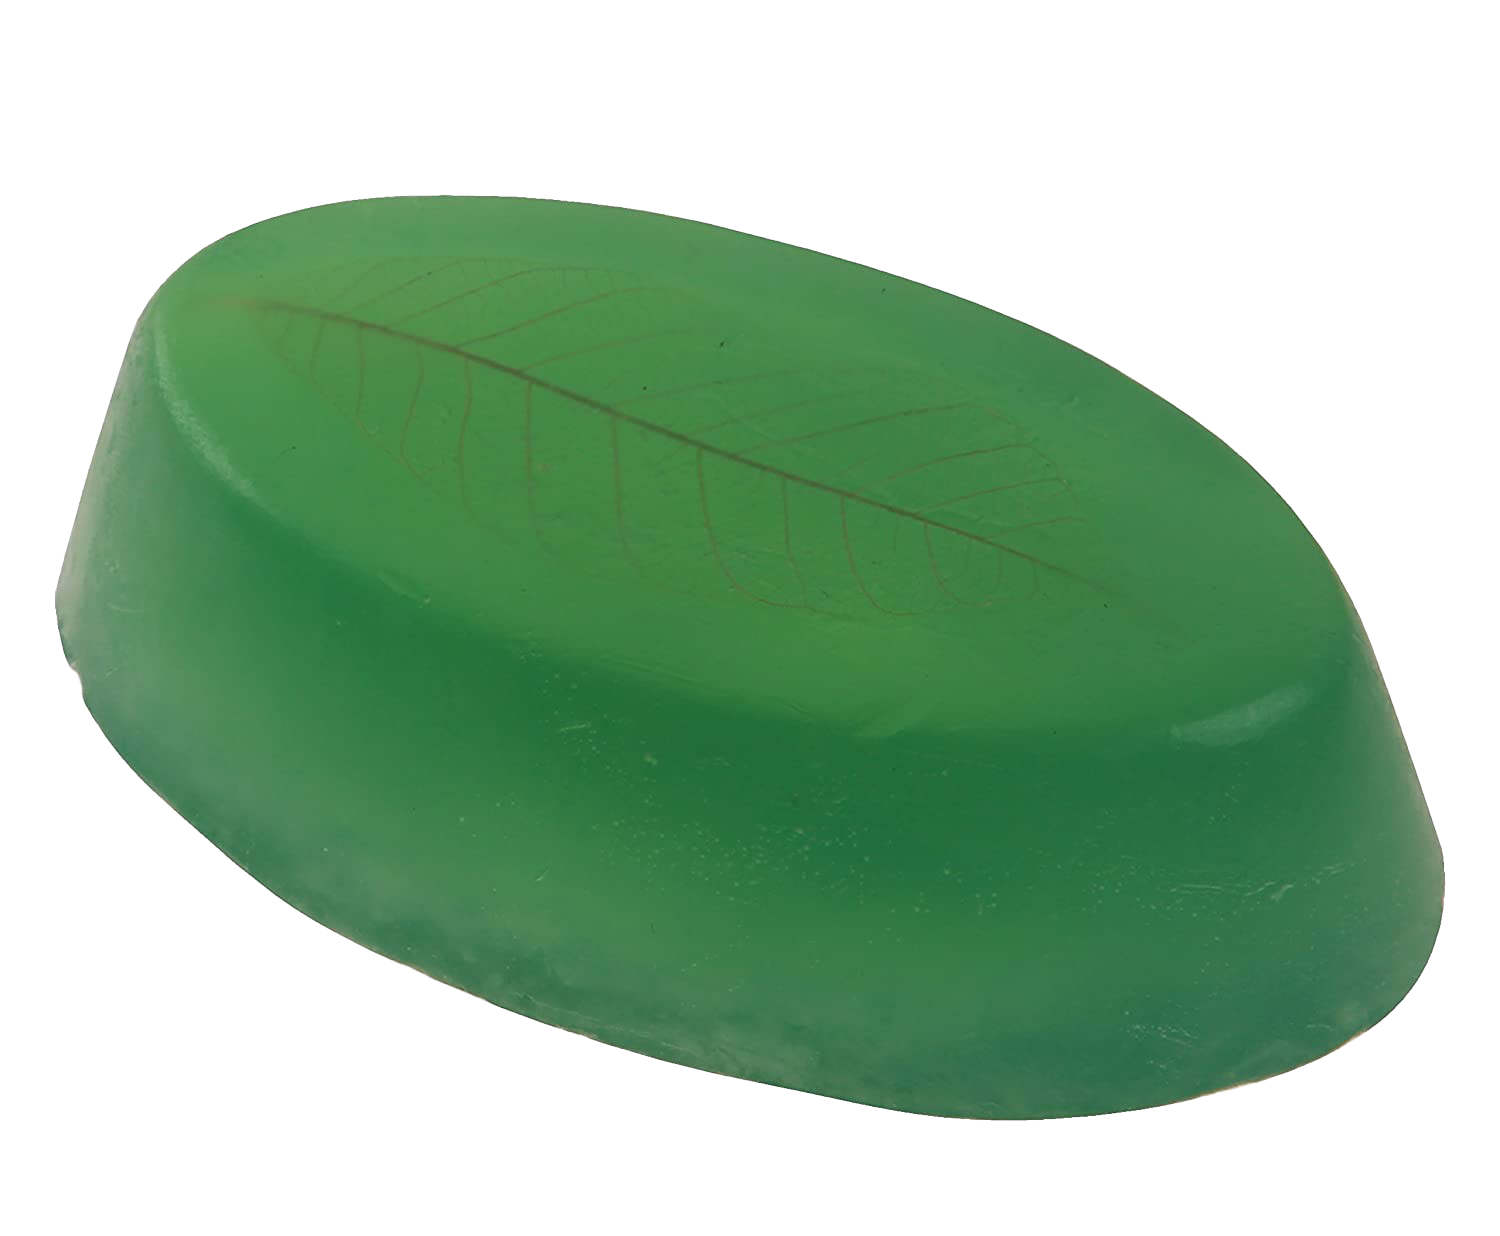 Glicerina jabón verde PNG imagen de alta calidad